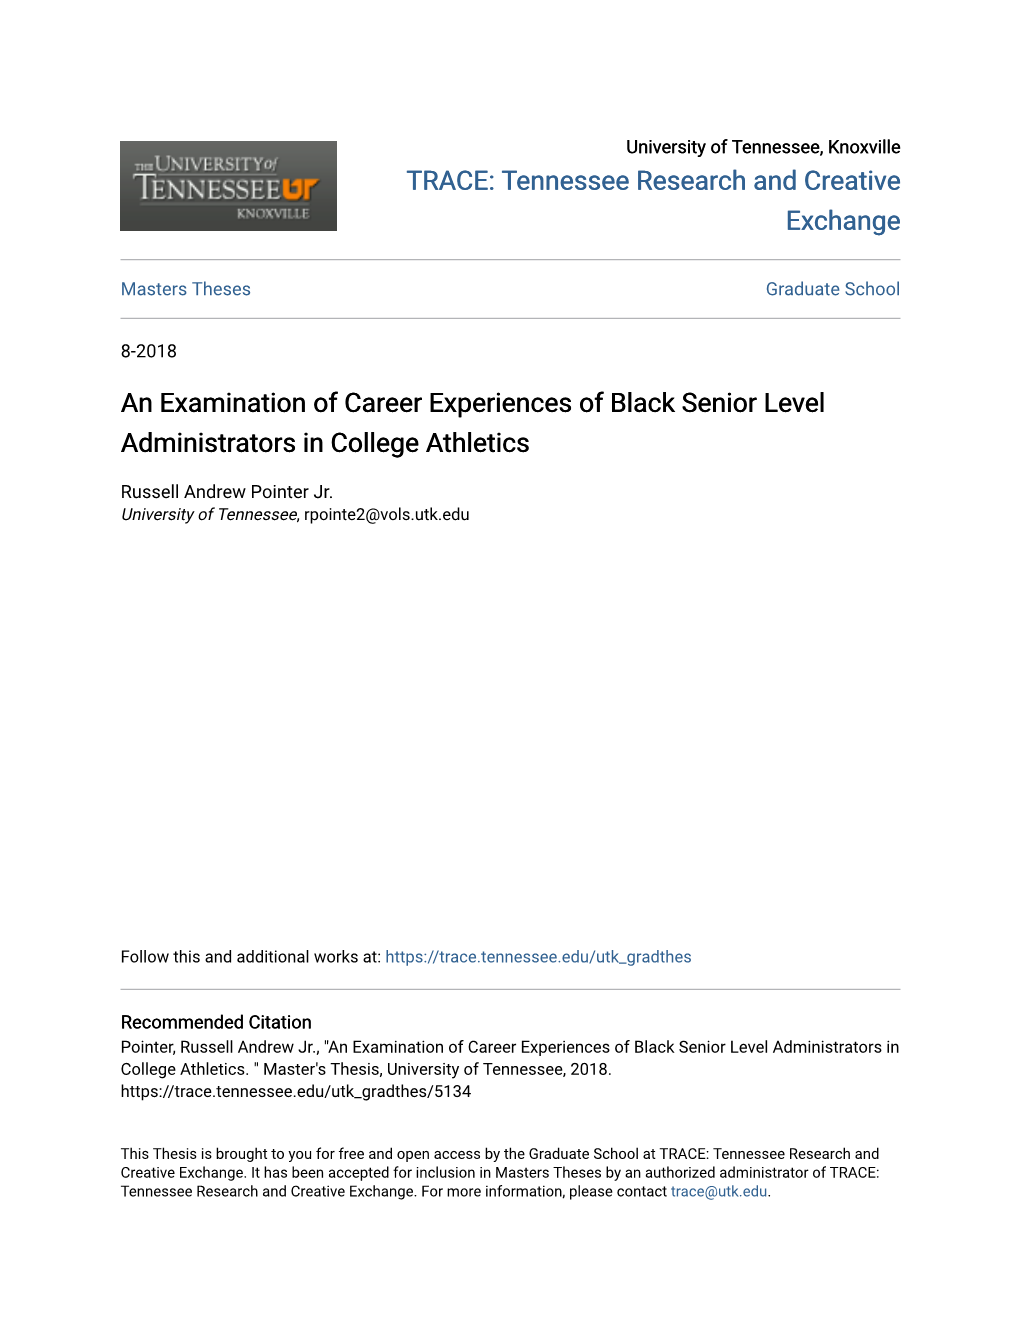 An Examination of Career Experiences of Black Senior Level Administrators in College Athletics